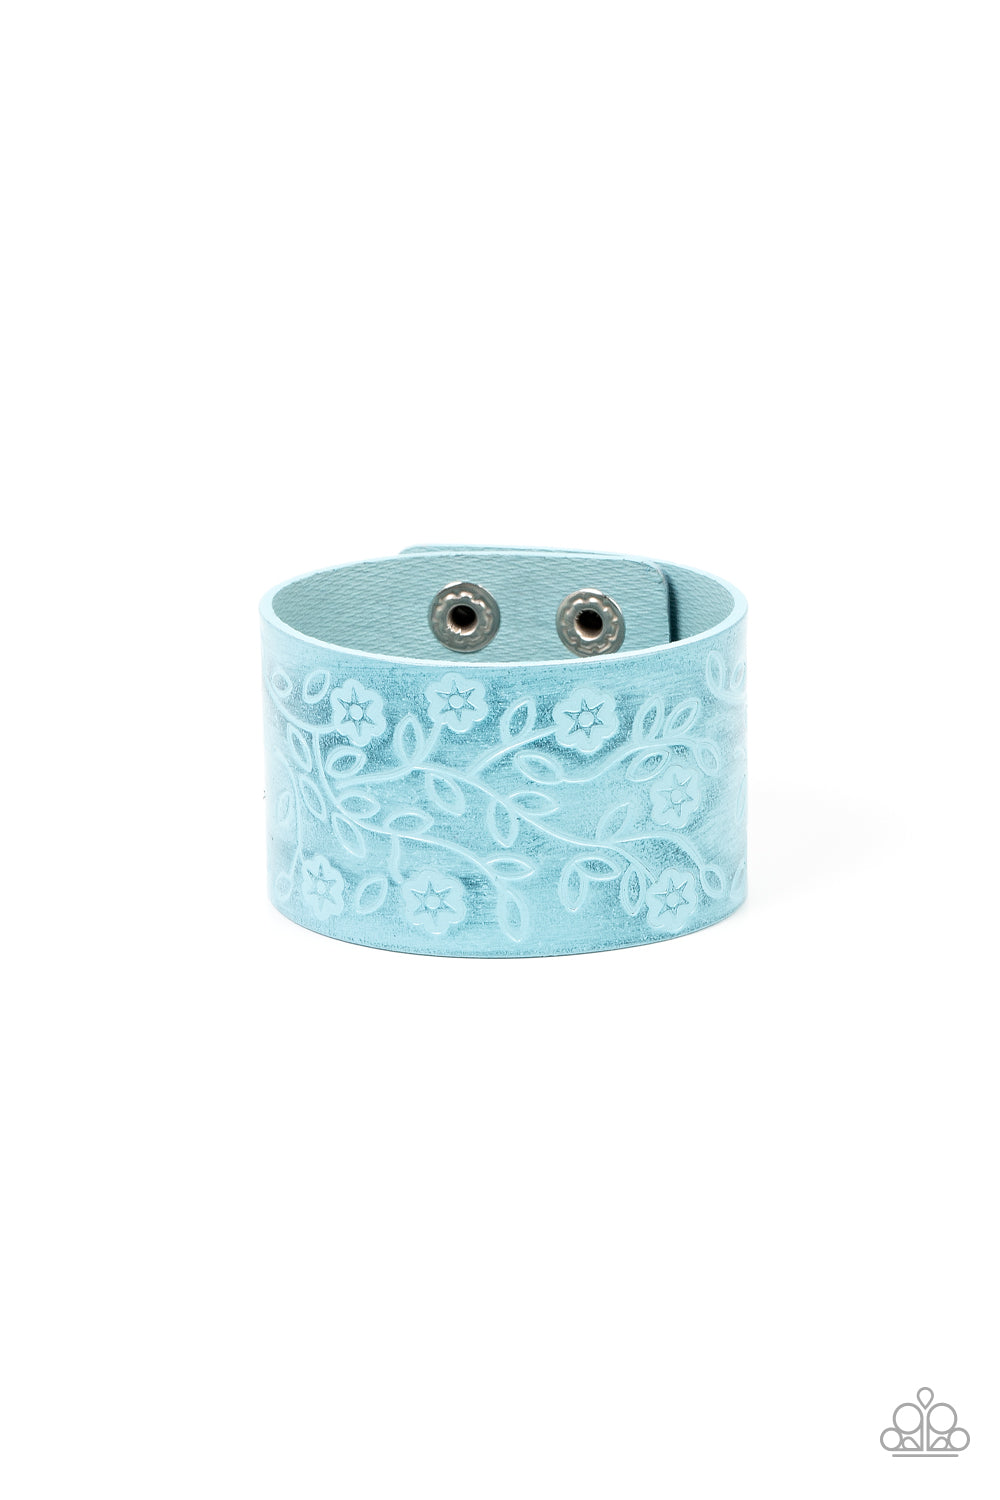 Rosy Wrap Up - blue - Paparazzi bracelet